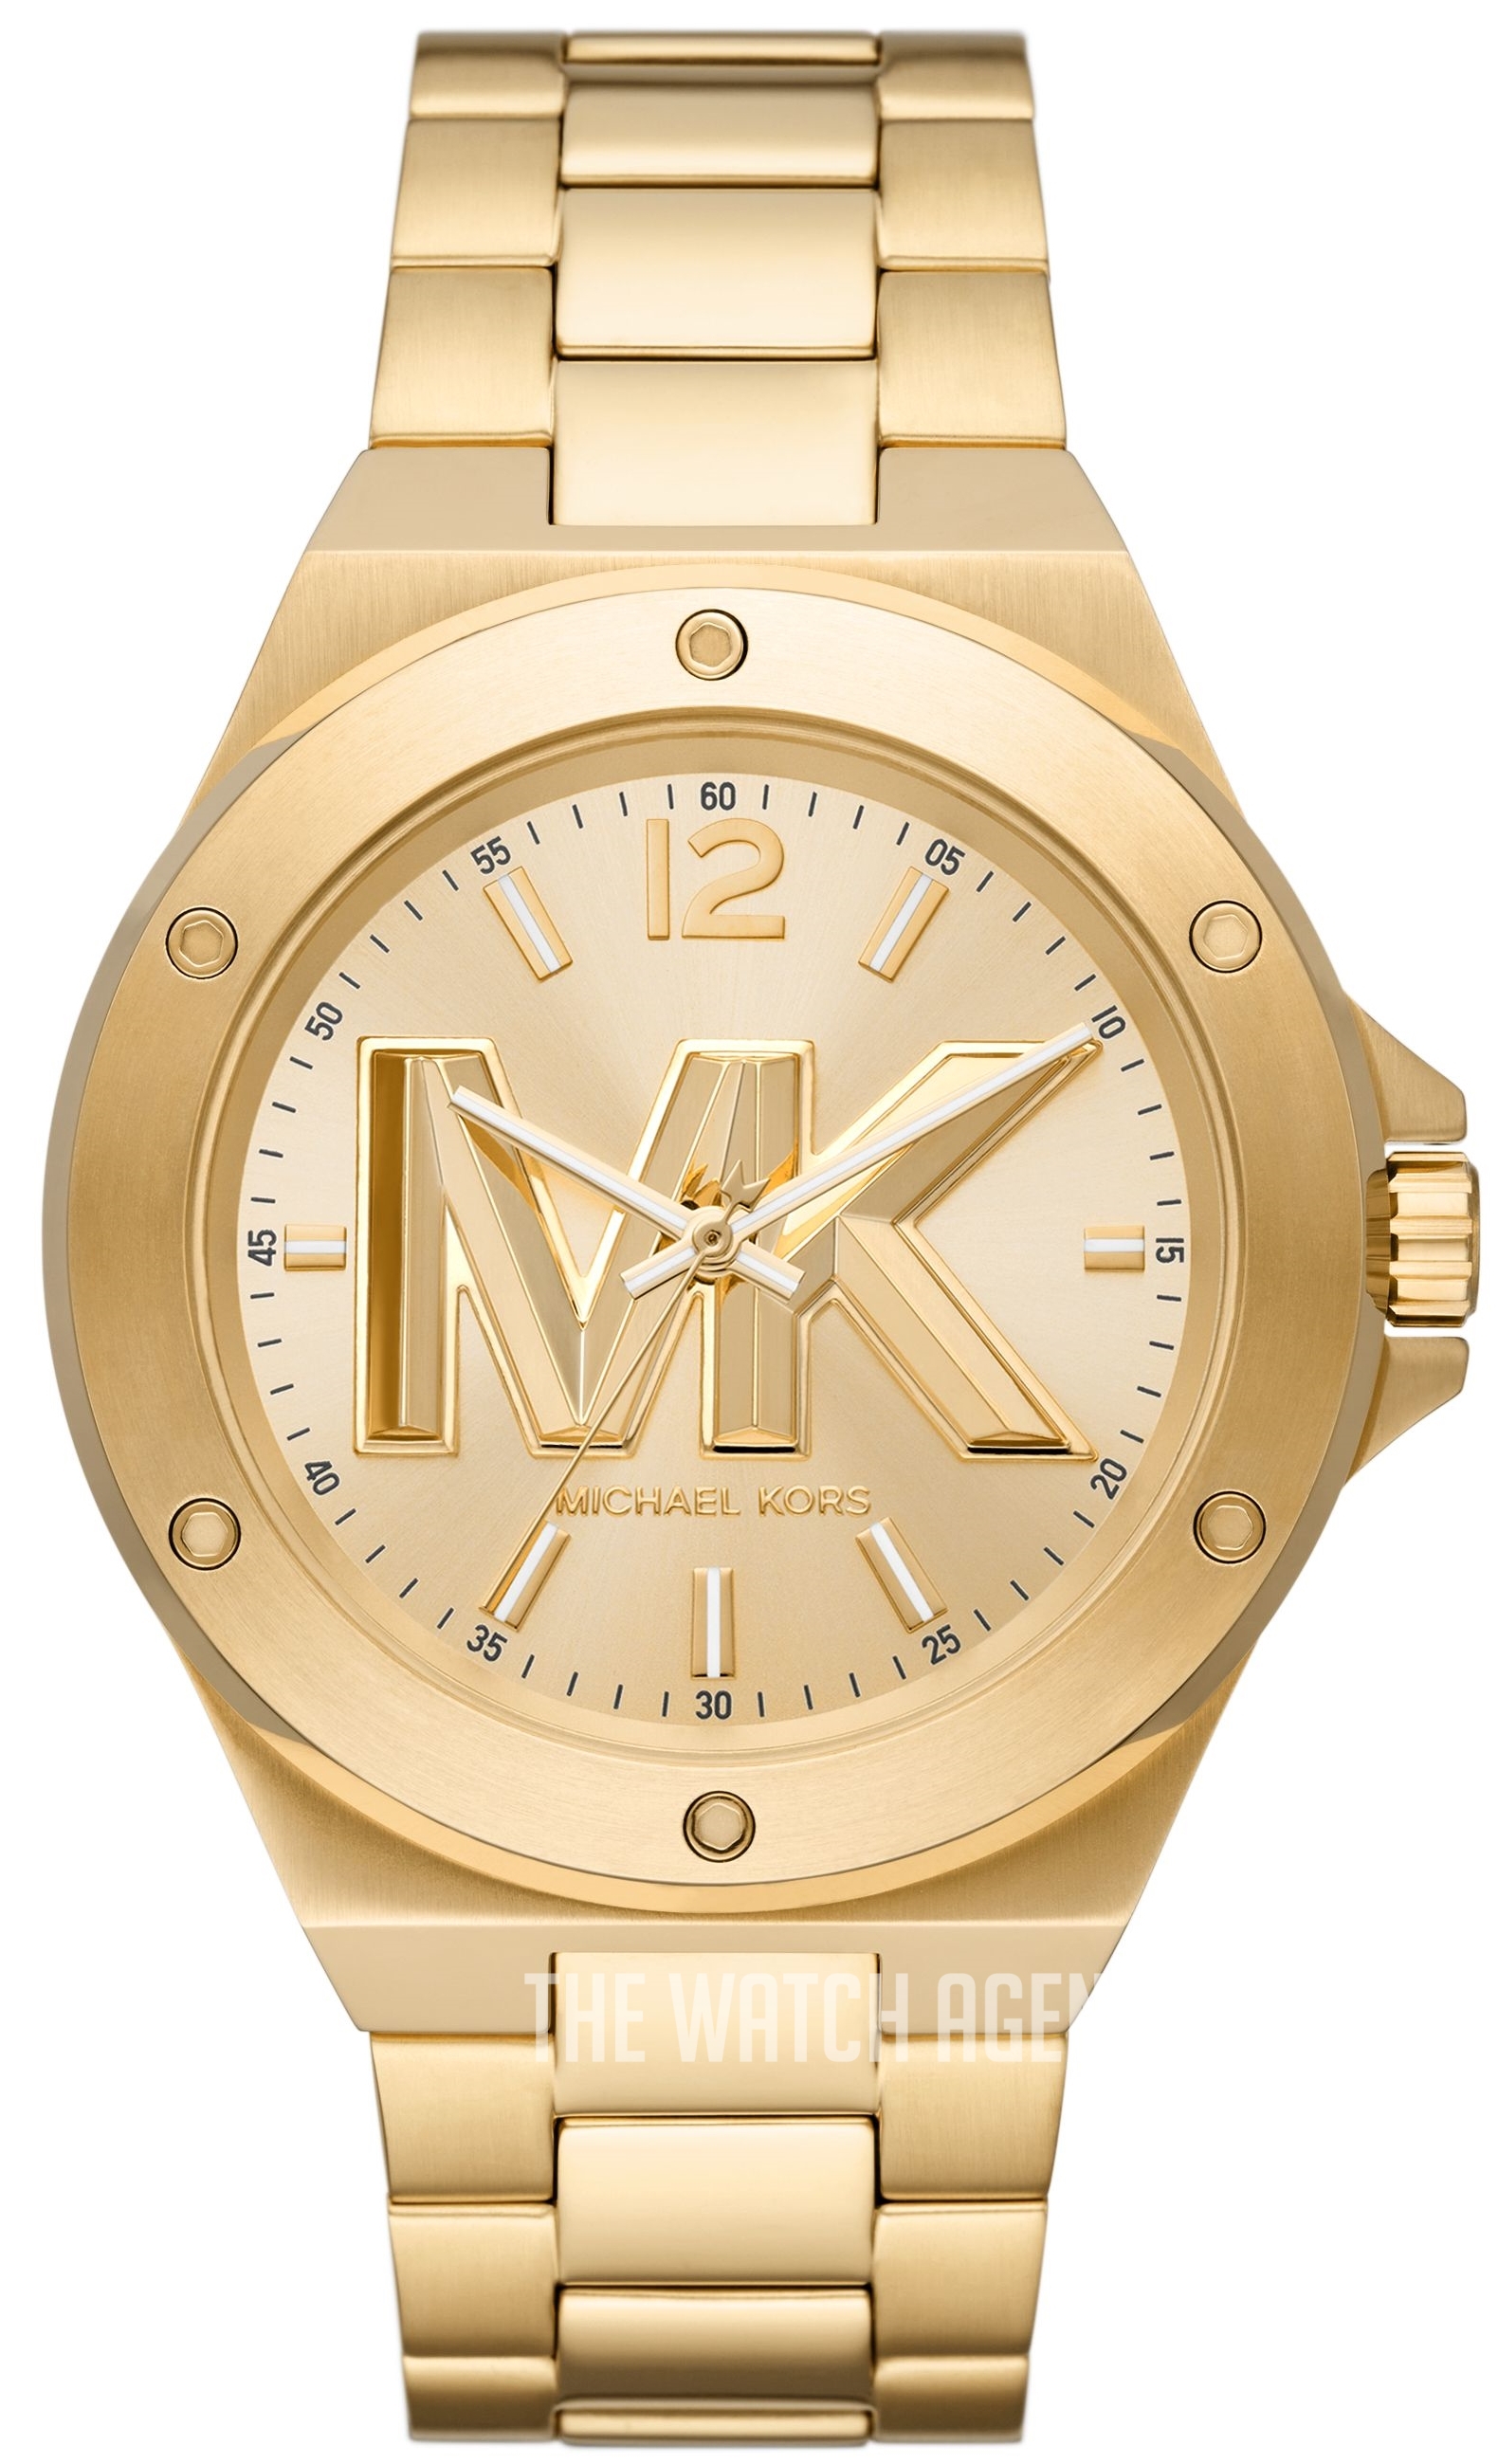 MK8939 Michael Kors Lennox TheWatchAgency™ 